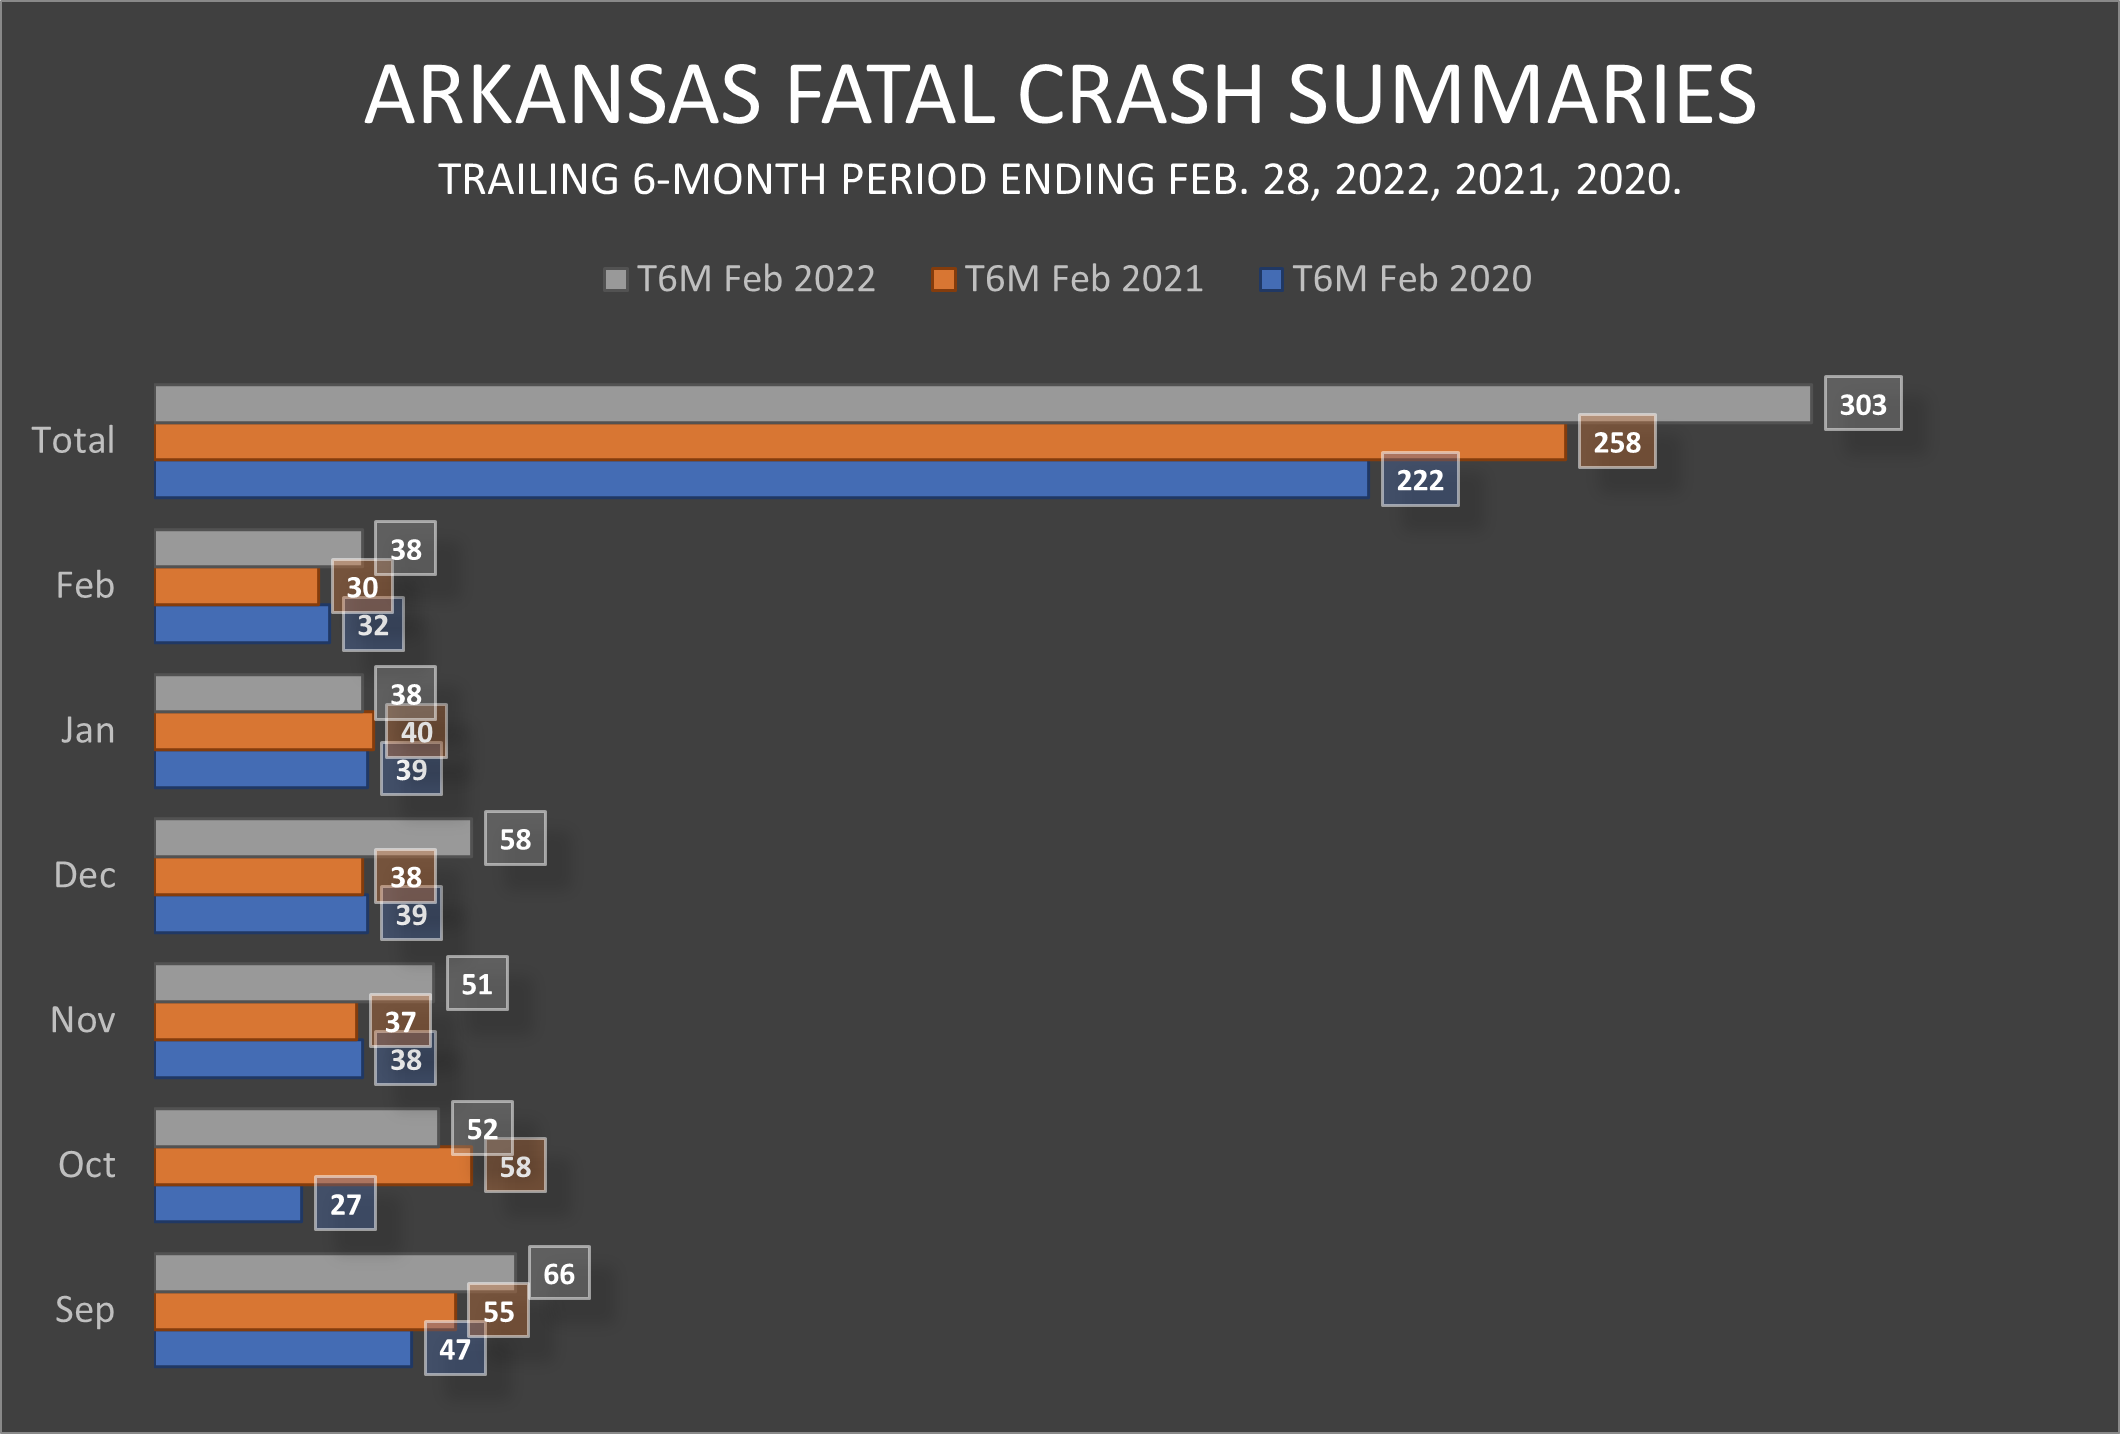 Arkansas fatal crashes comparisons